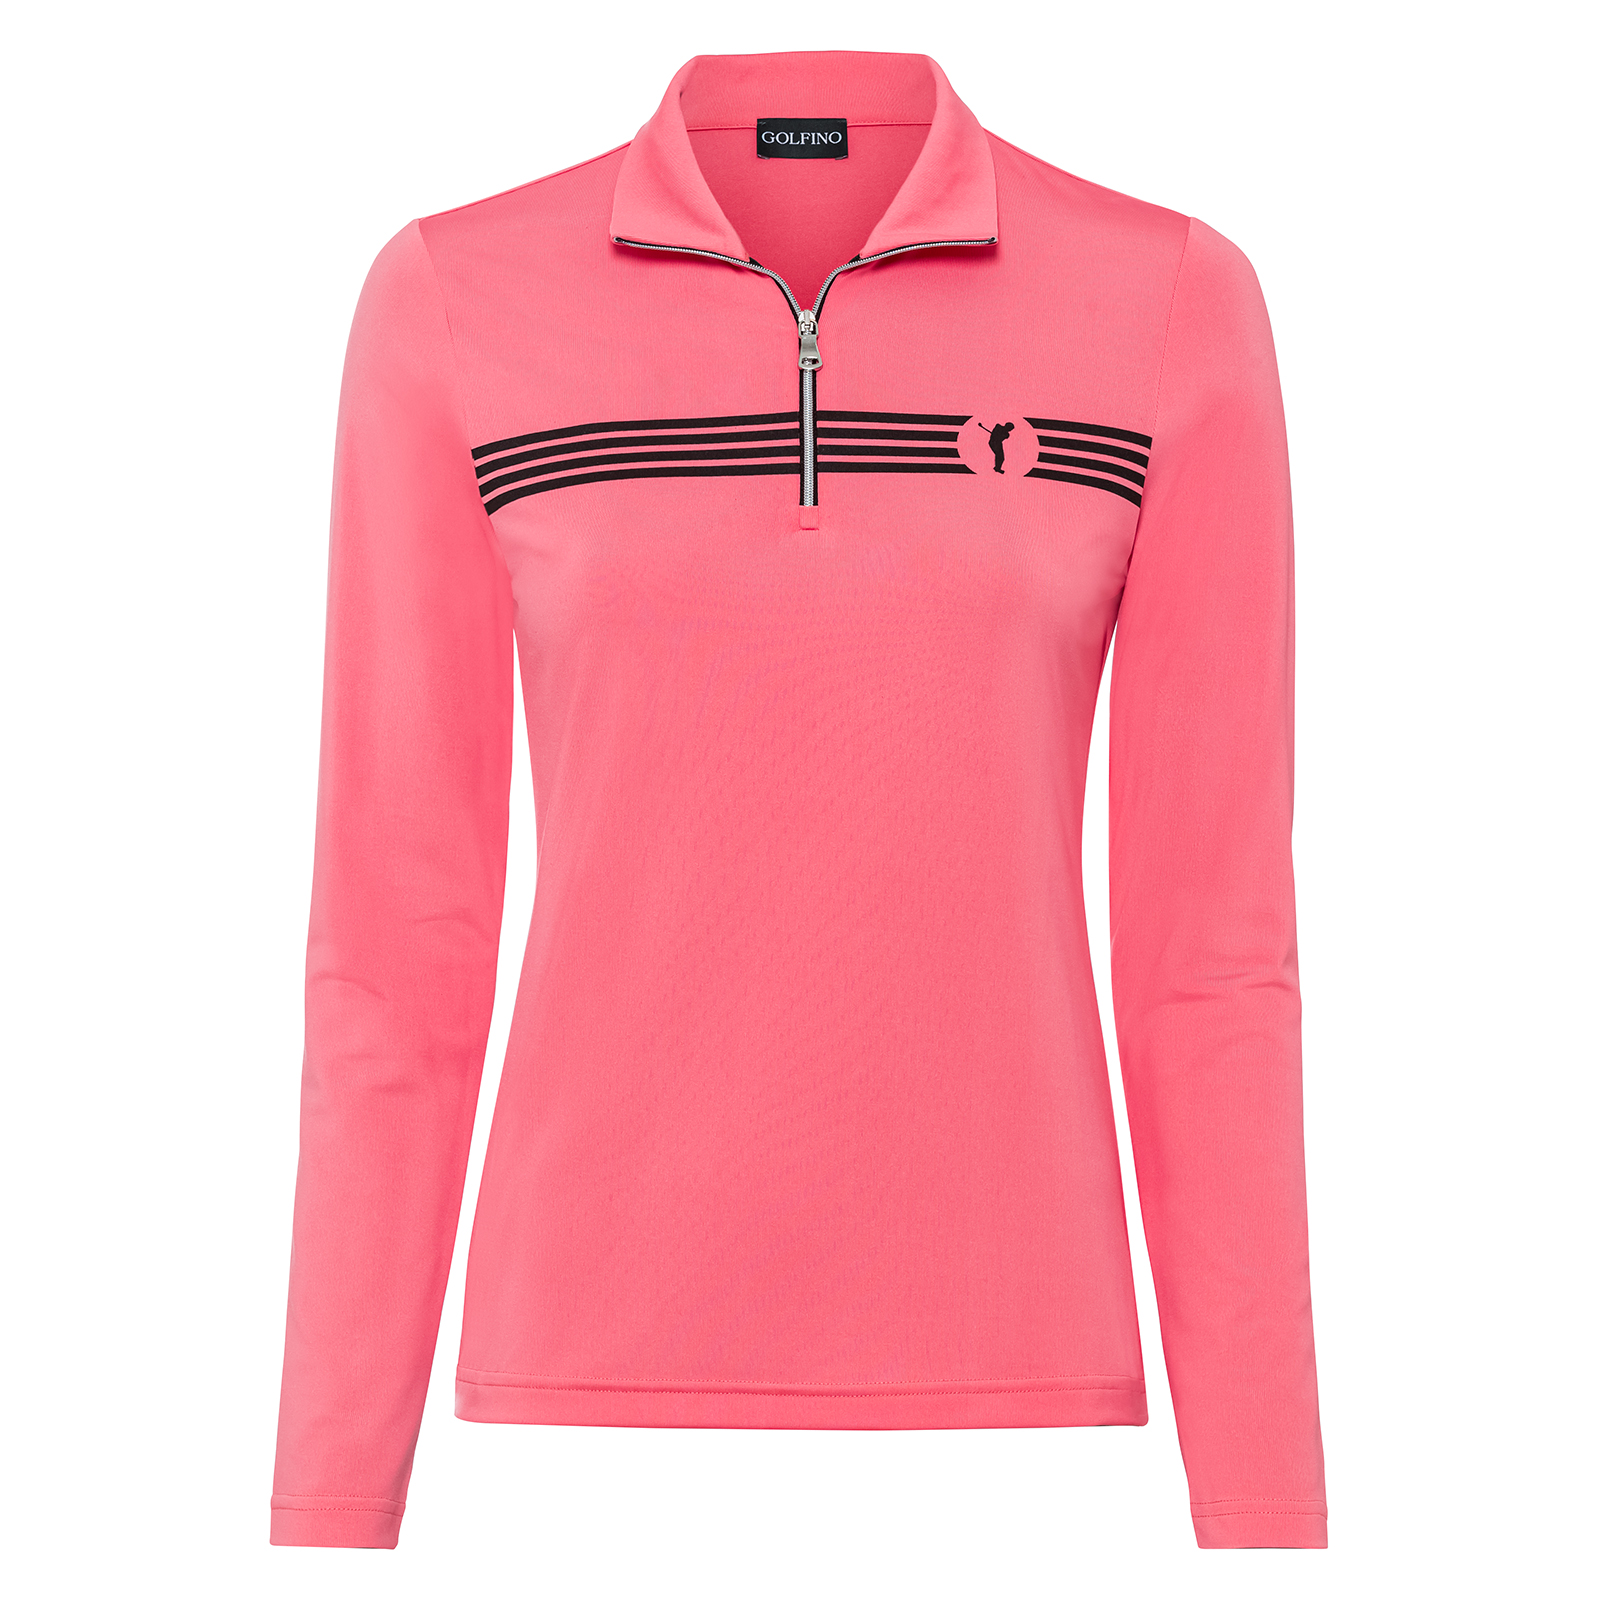 Langarm Golf Shirt für Damen mit neuartigem Logo-Print